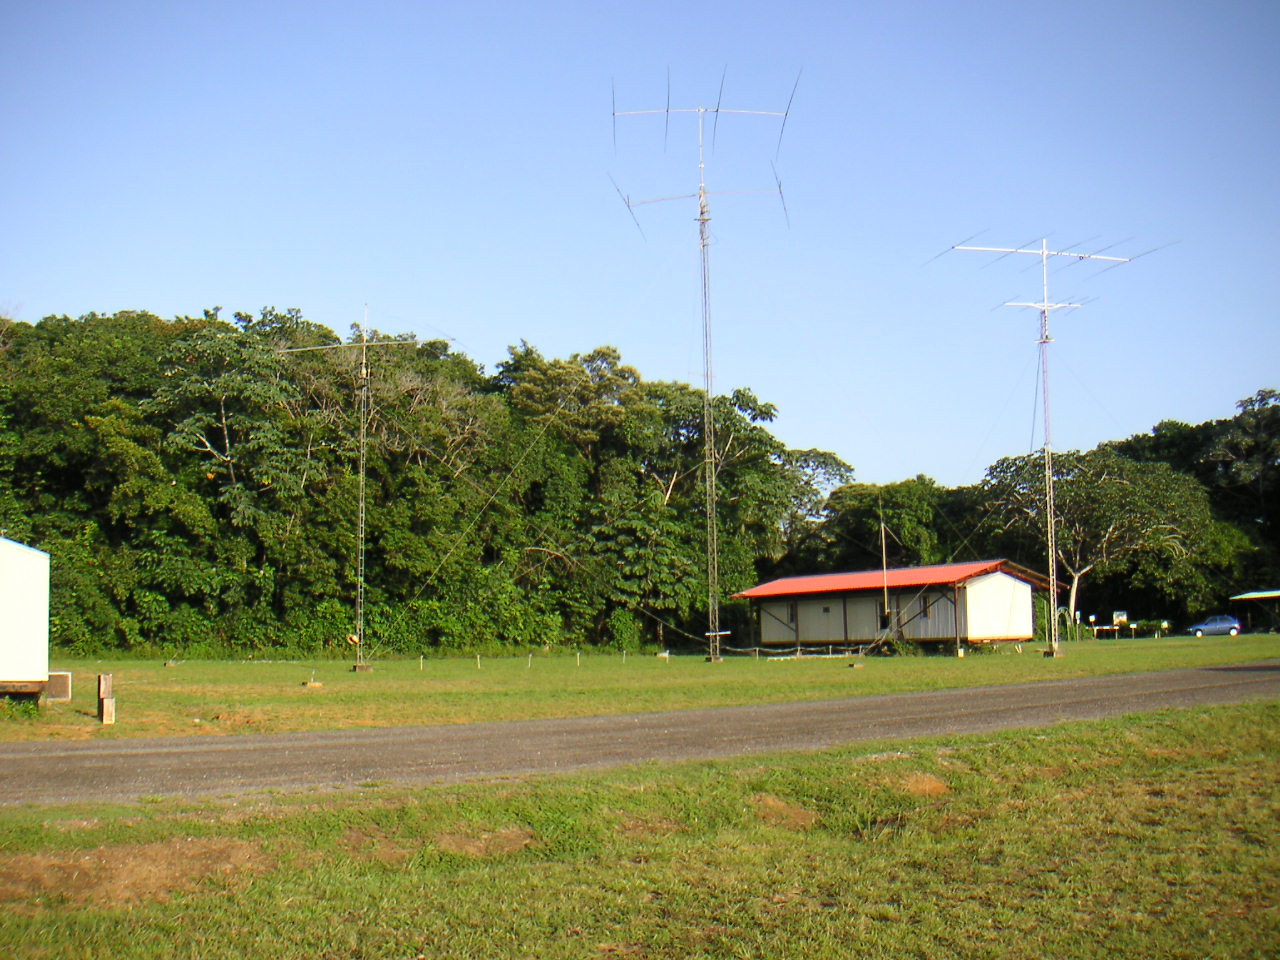 Antenna View 2005